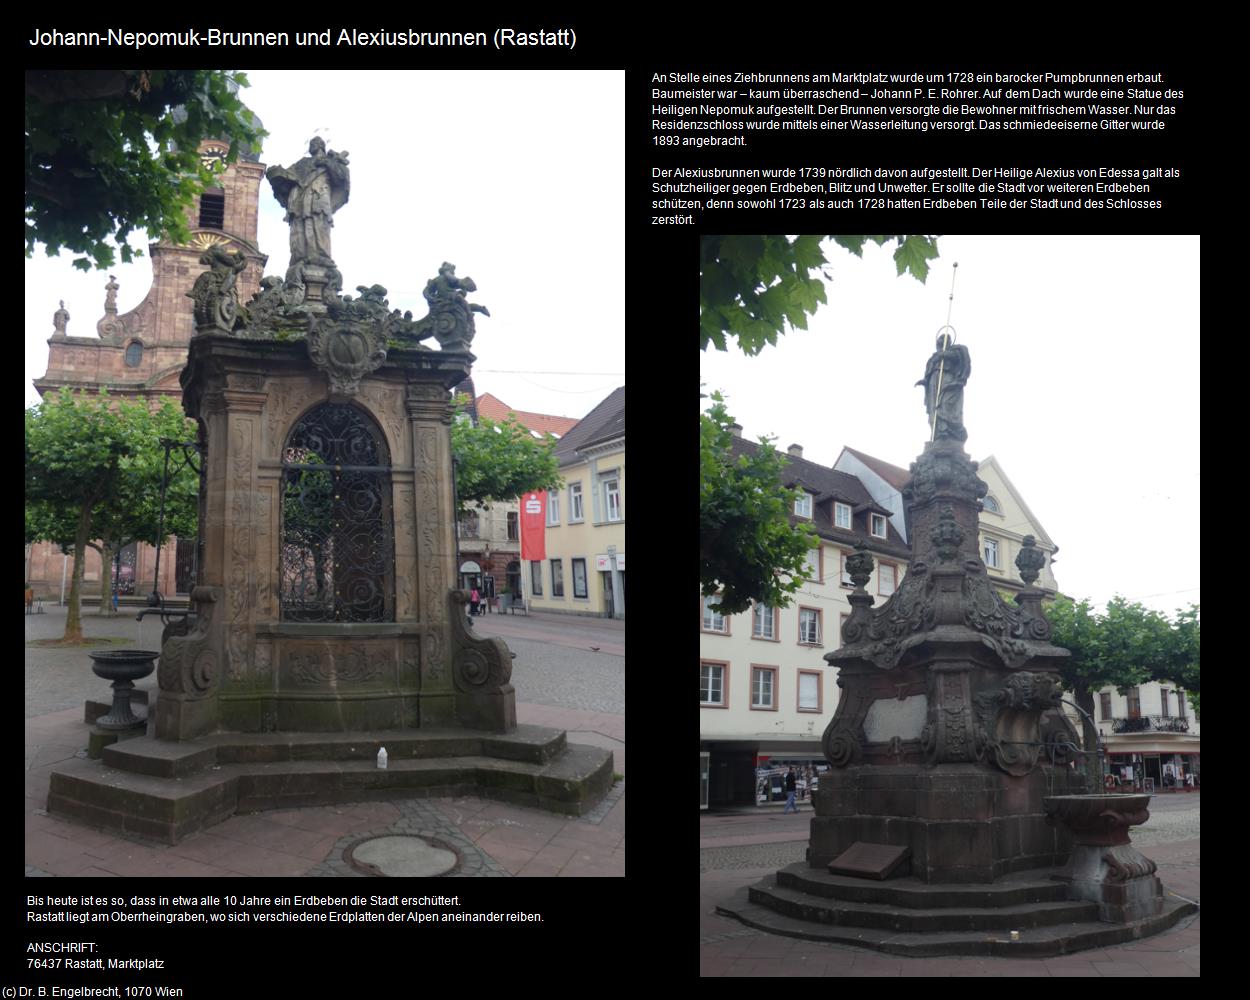 Johann-Nepomuk-Brunnen und Alexiusbrunnen (Rastatt) in Kulturatlas-BADEN-WÜRTTEMBERG